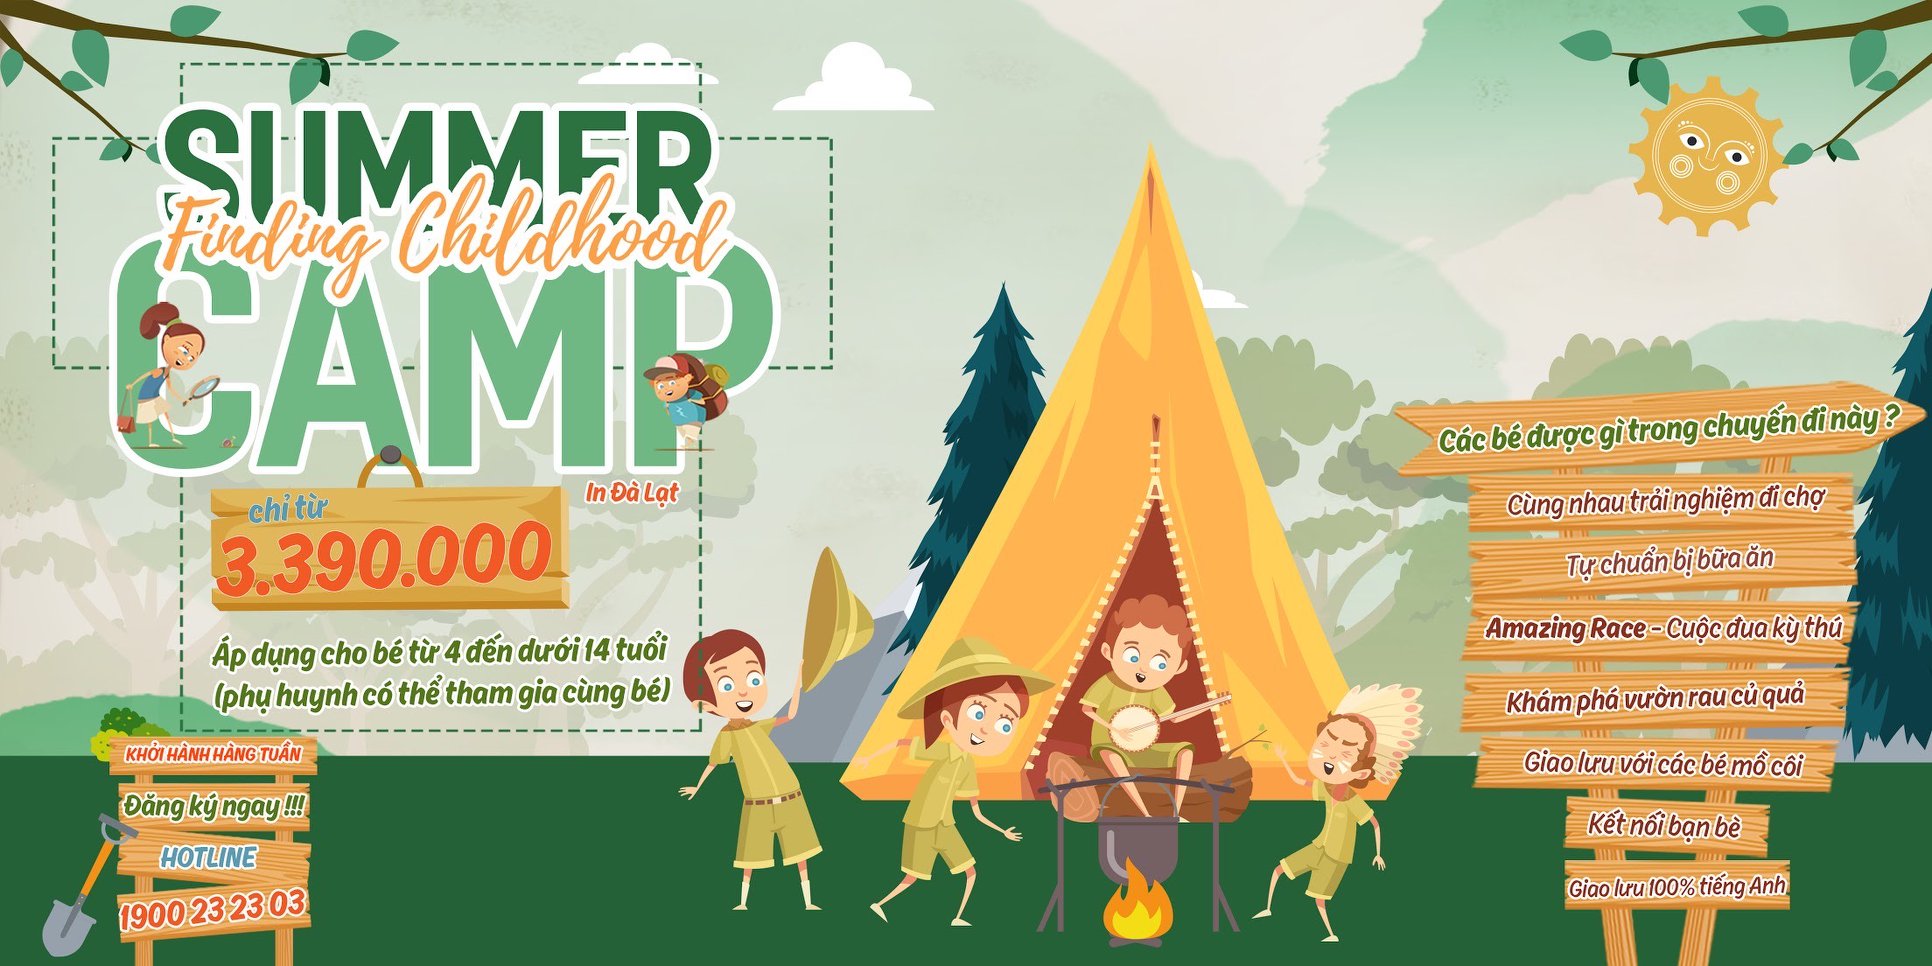 FINDING CHILDHOOD SUMMER CAMP 2020 - 膼脌 L岷燭 AMAZING RACE